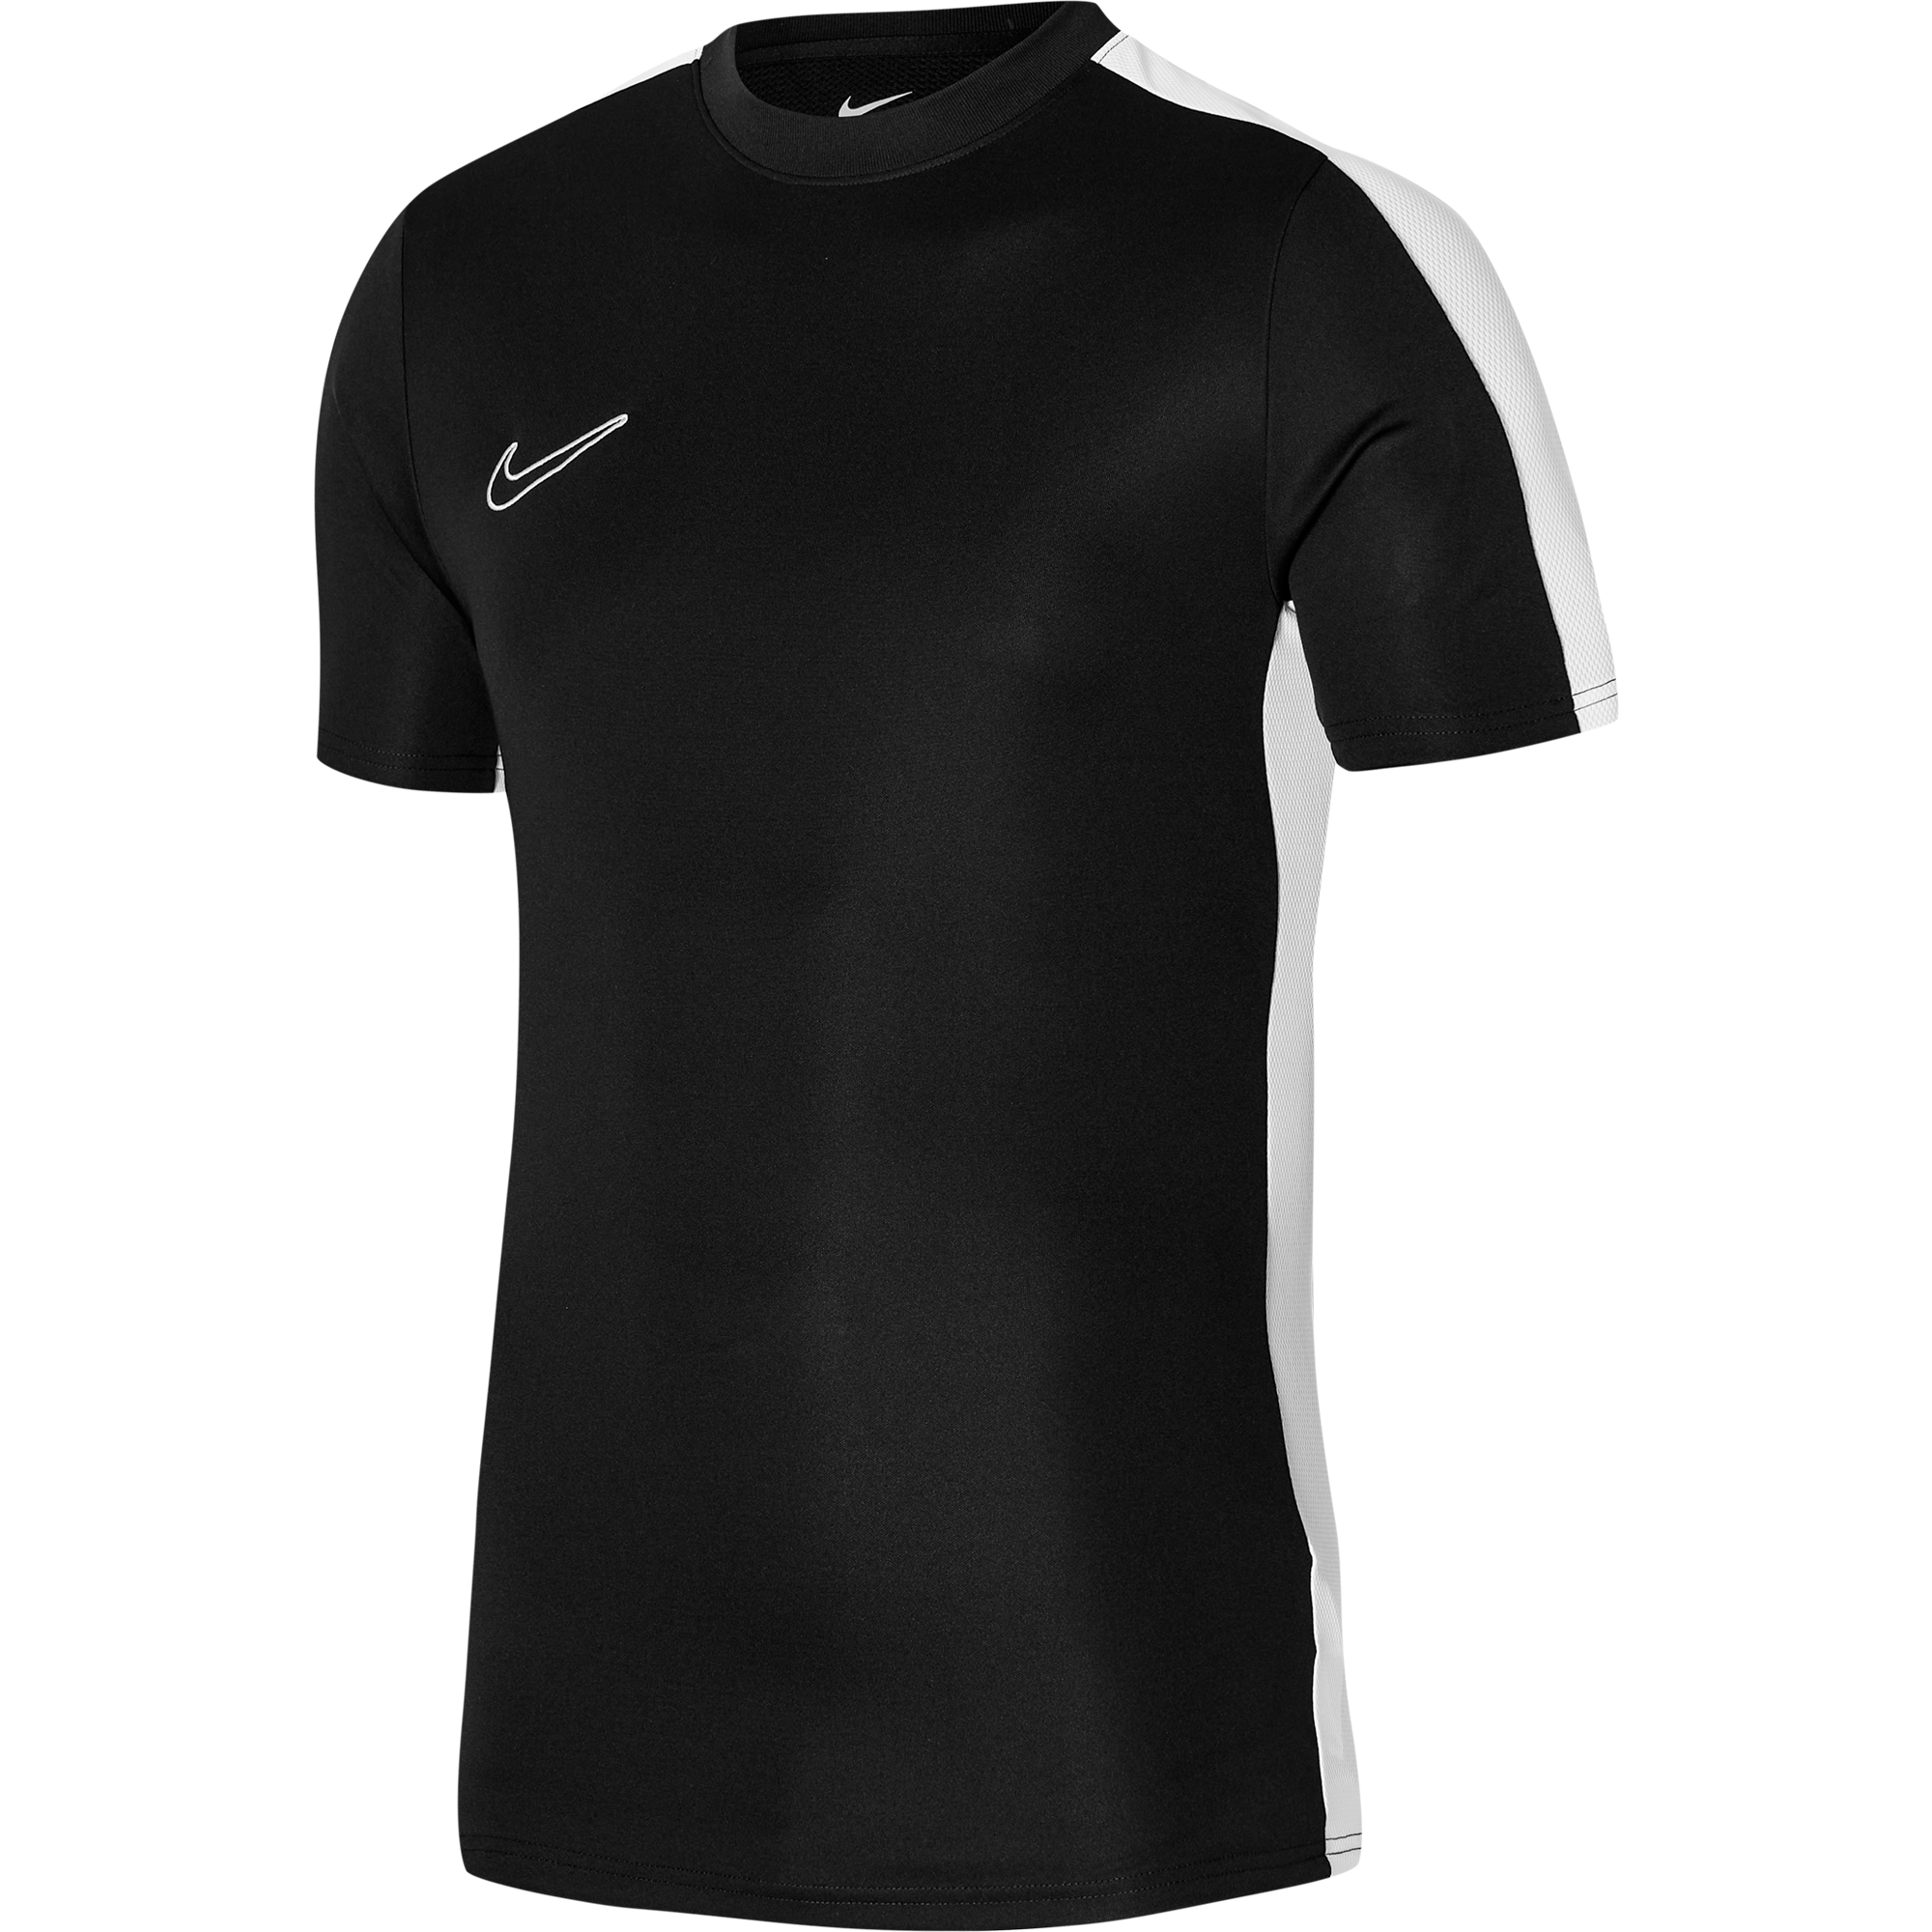 Nike Dri FIT Short Sleeve Shirt in Black/White/White